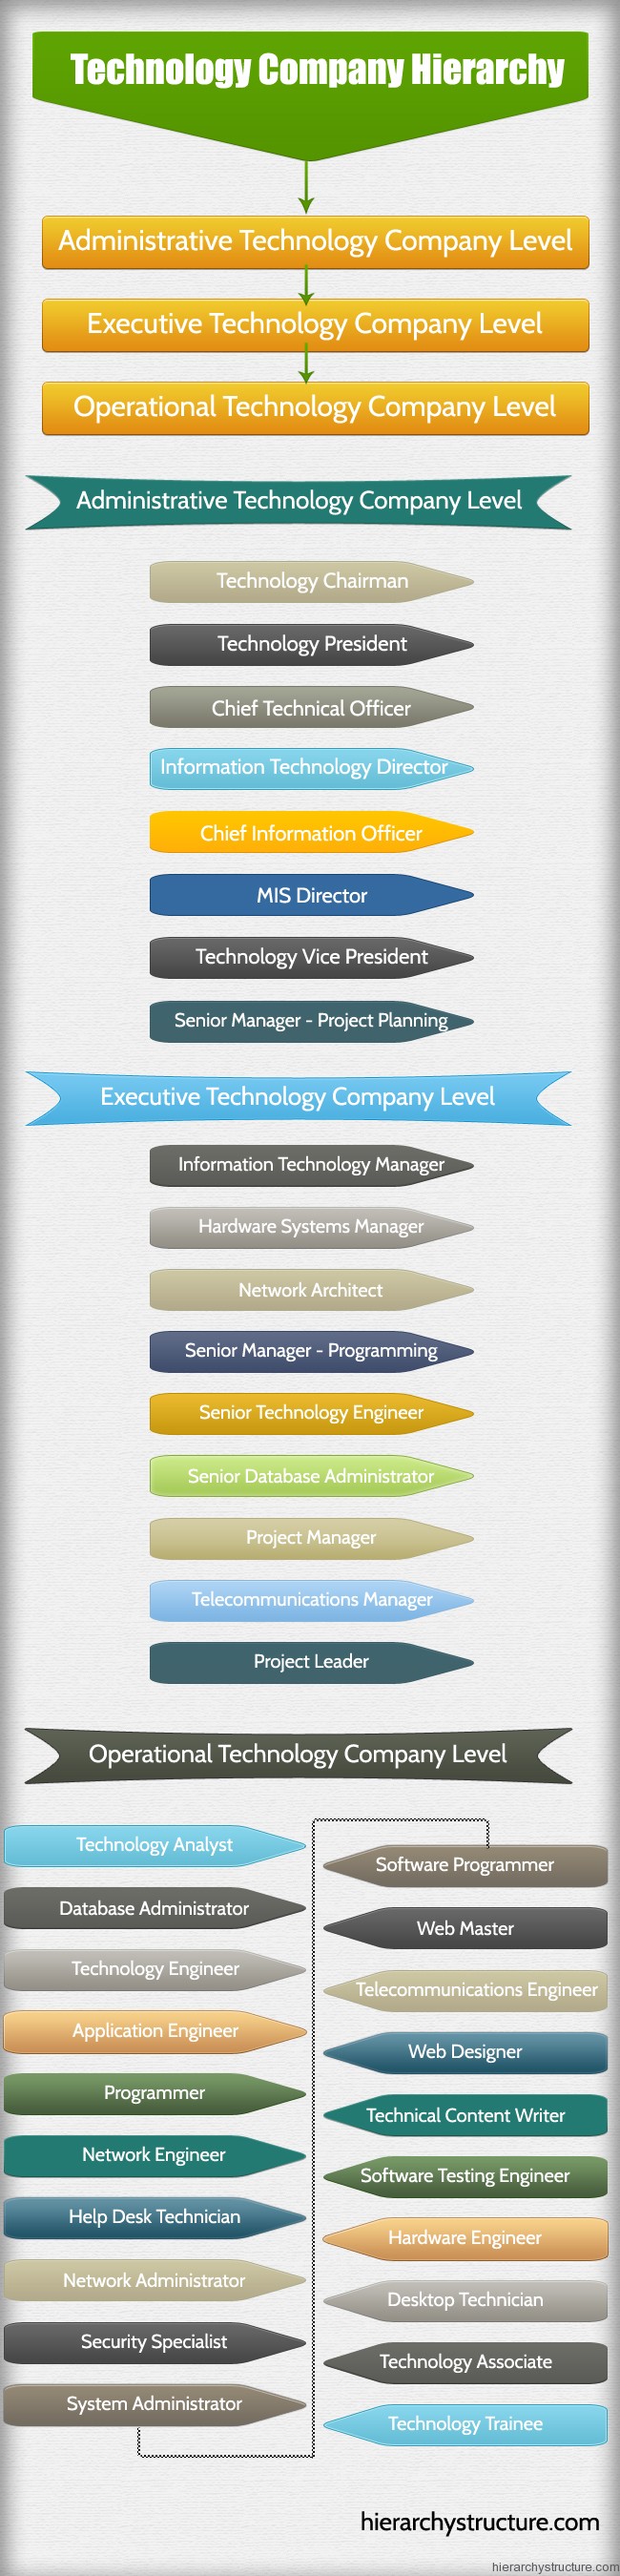 Technology Company Hierarchy